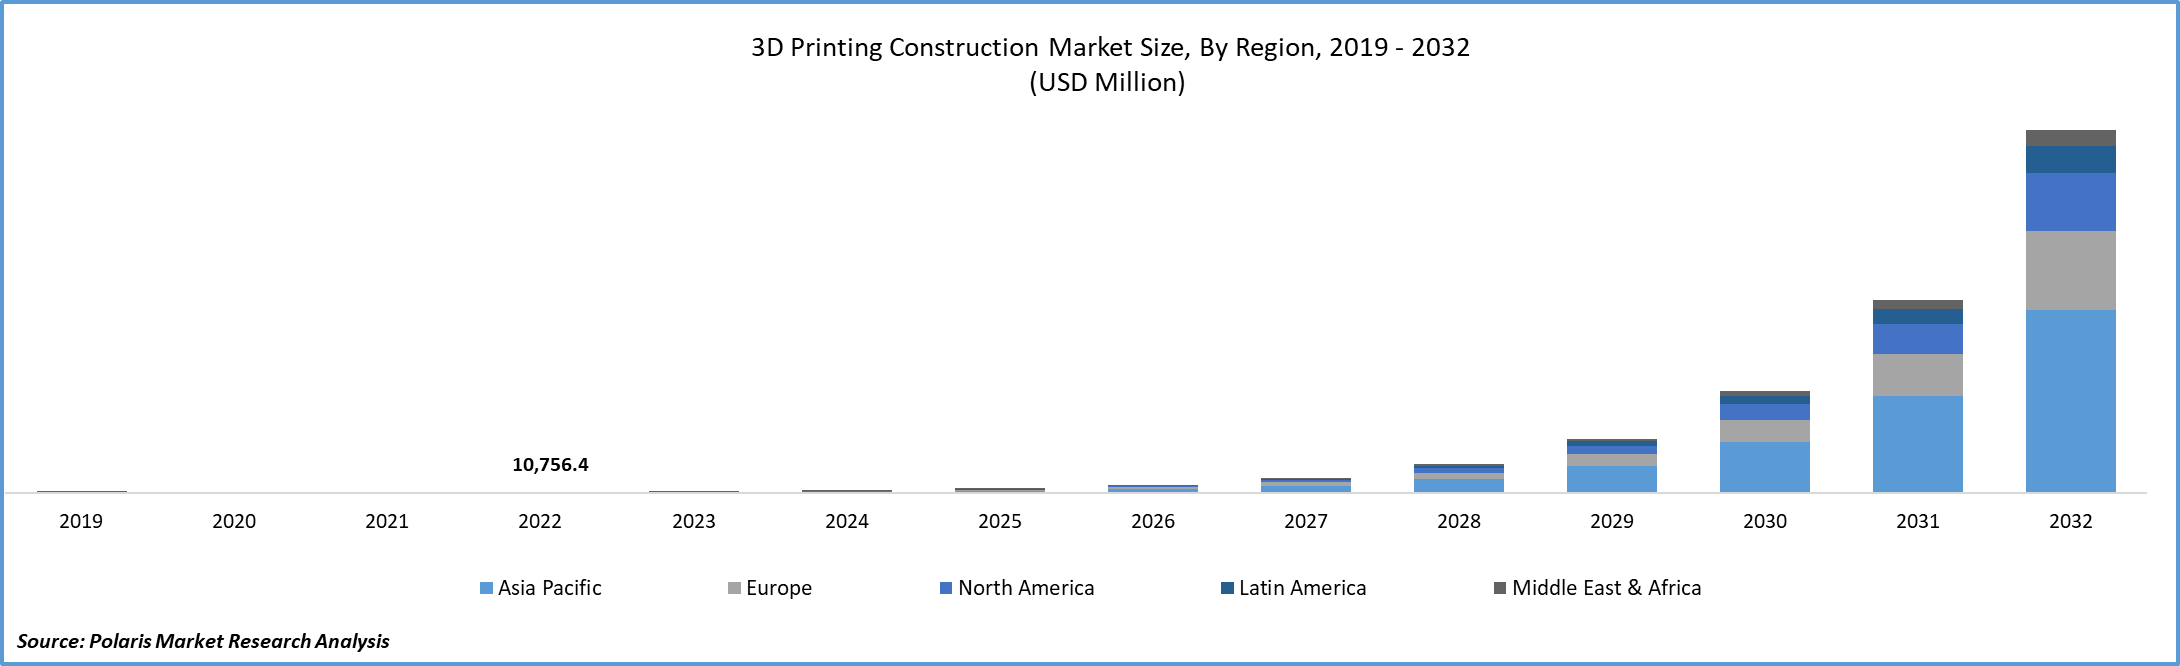 3D Printing Construction Market Size